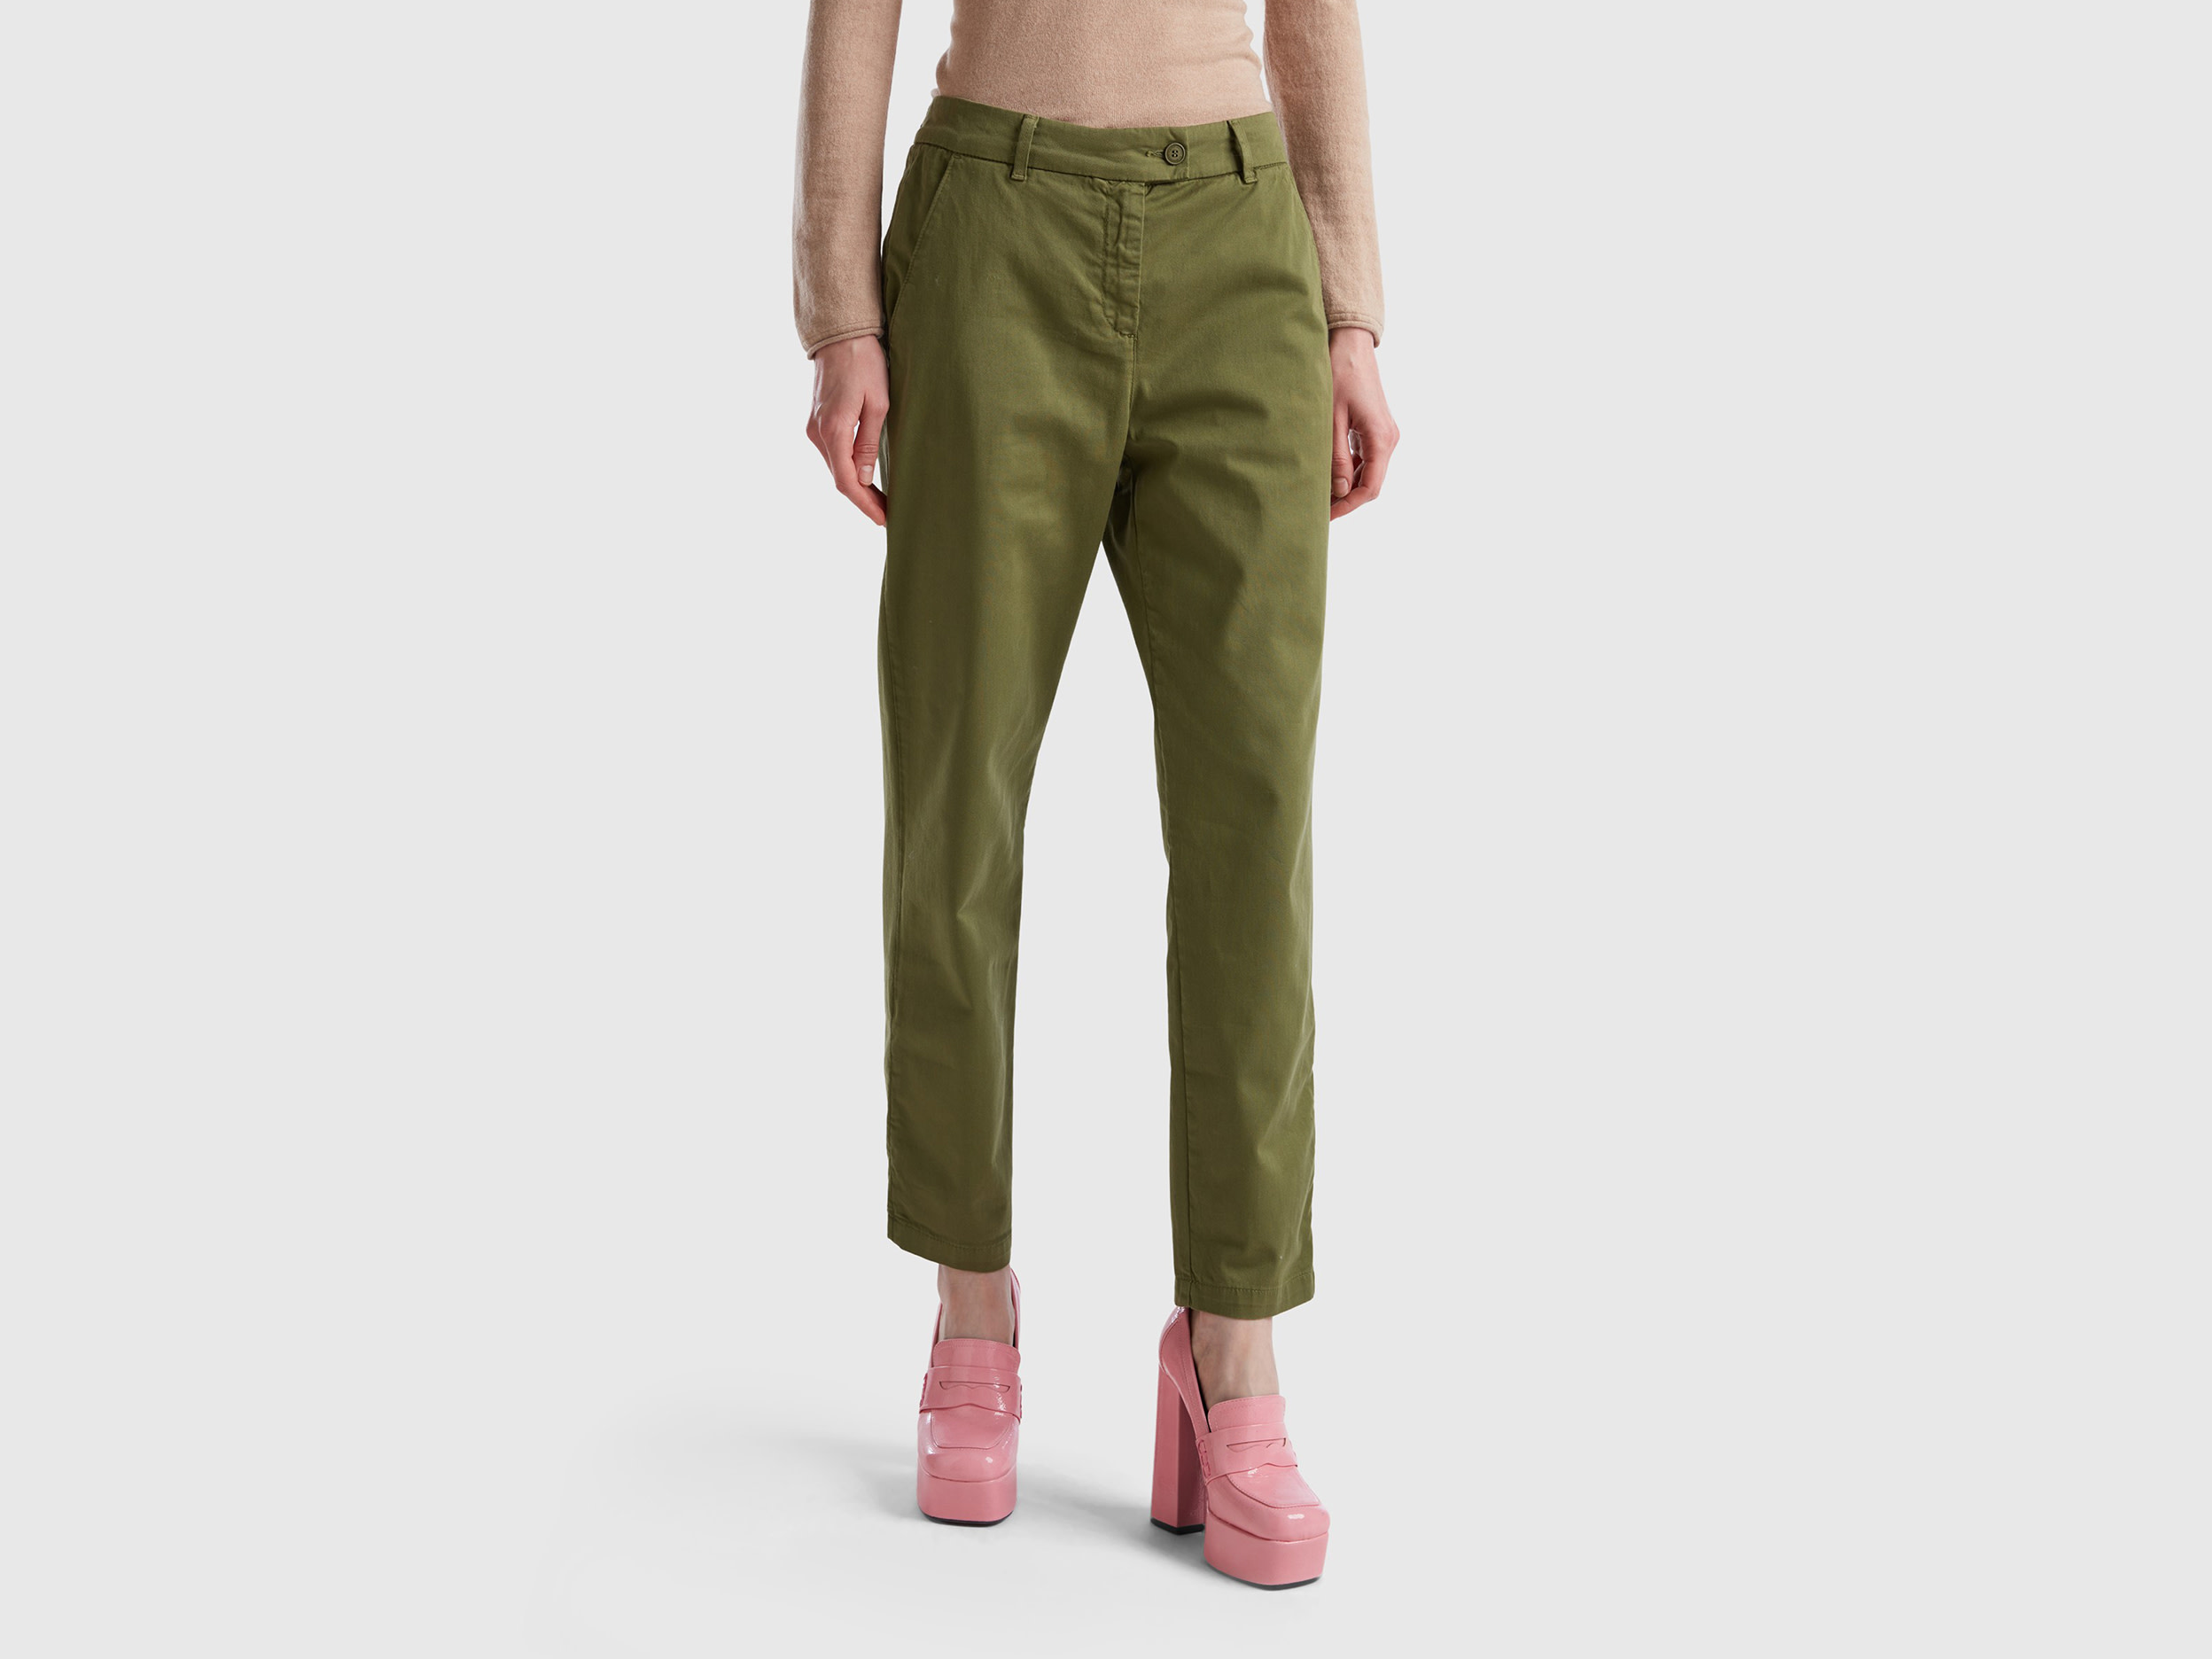 Benetton, Stretch Cotton Chino Trousers, size 16, Military Green, Women